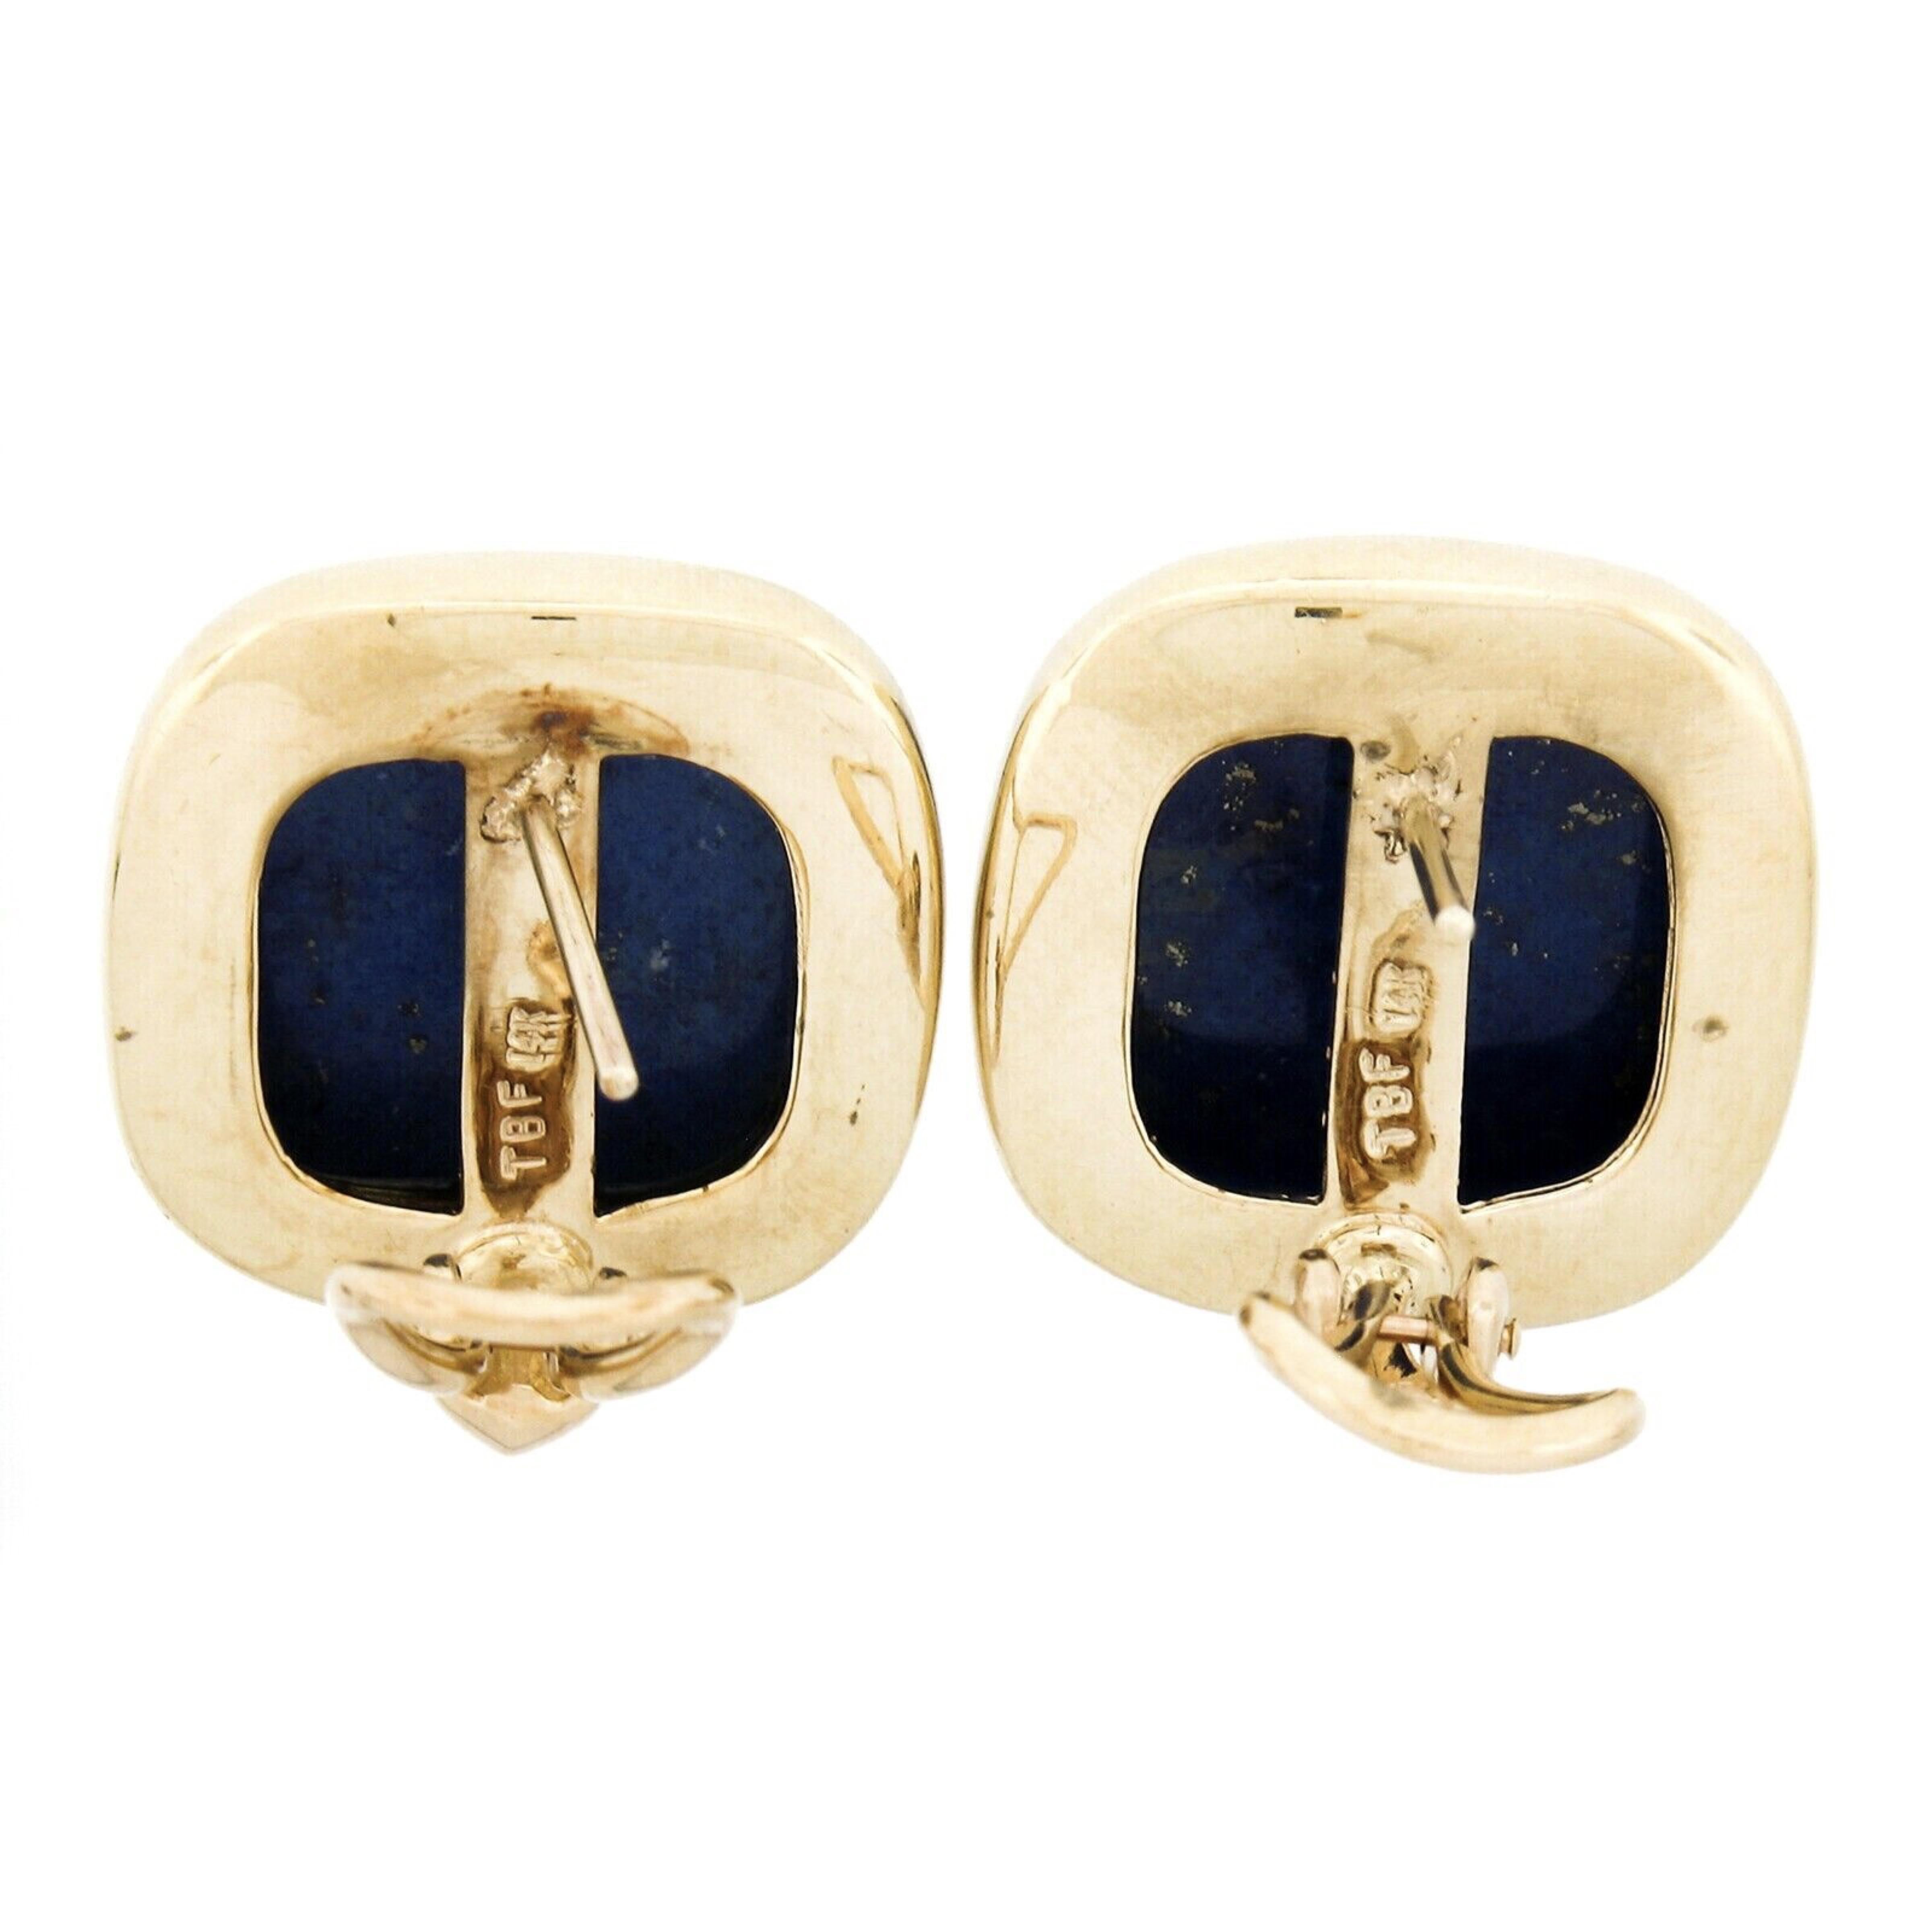 Große große 14K Gold Kissen Cabochon polierte Lapislazuli Lünette gesetzte Knopfleiste Ohrringe im Angebot 1